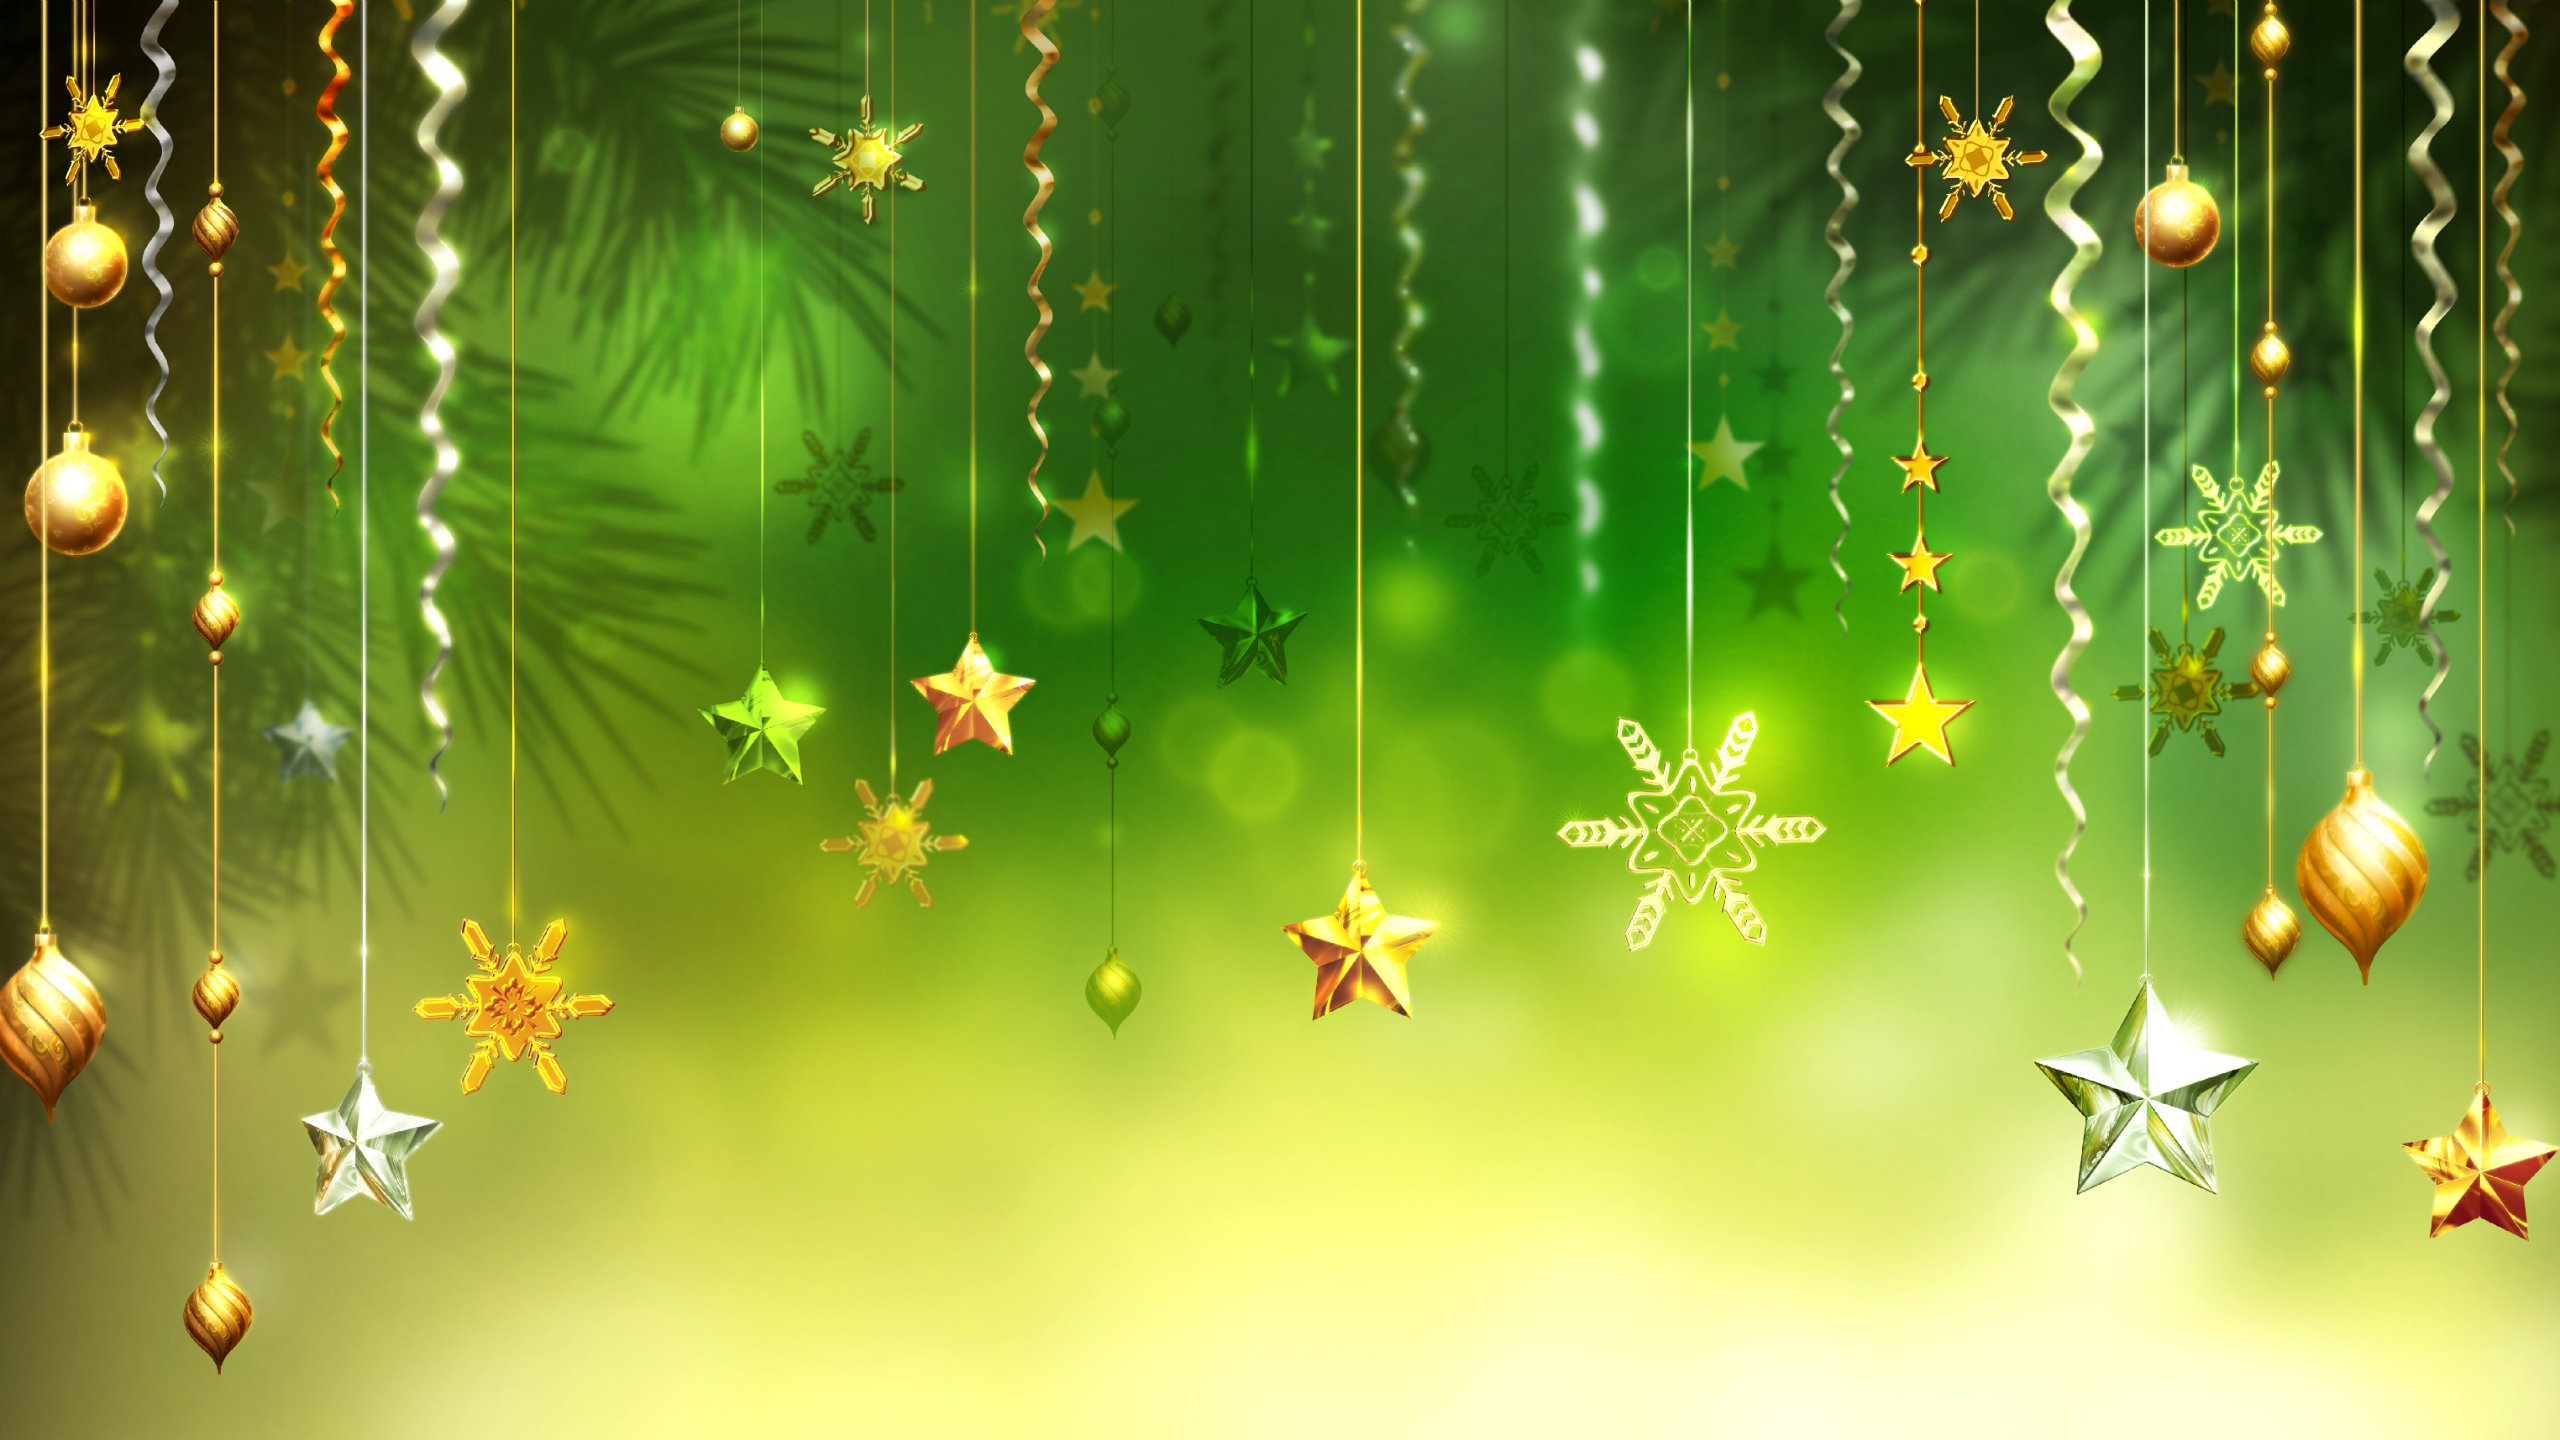 High resolution Christmas Ornaments/Decorations hd 2560x1440 wallpaper ID:434426 for desktop